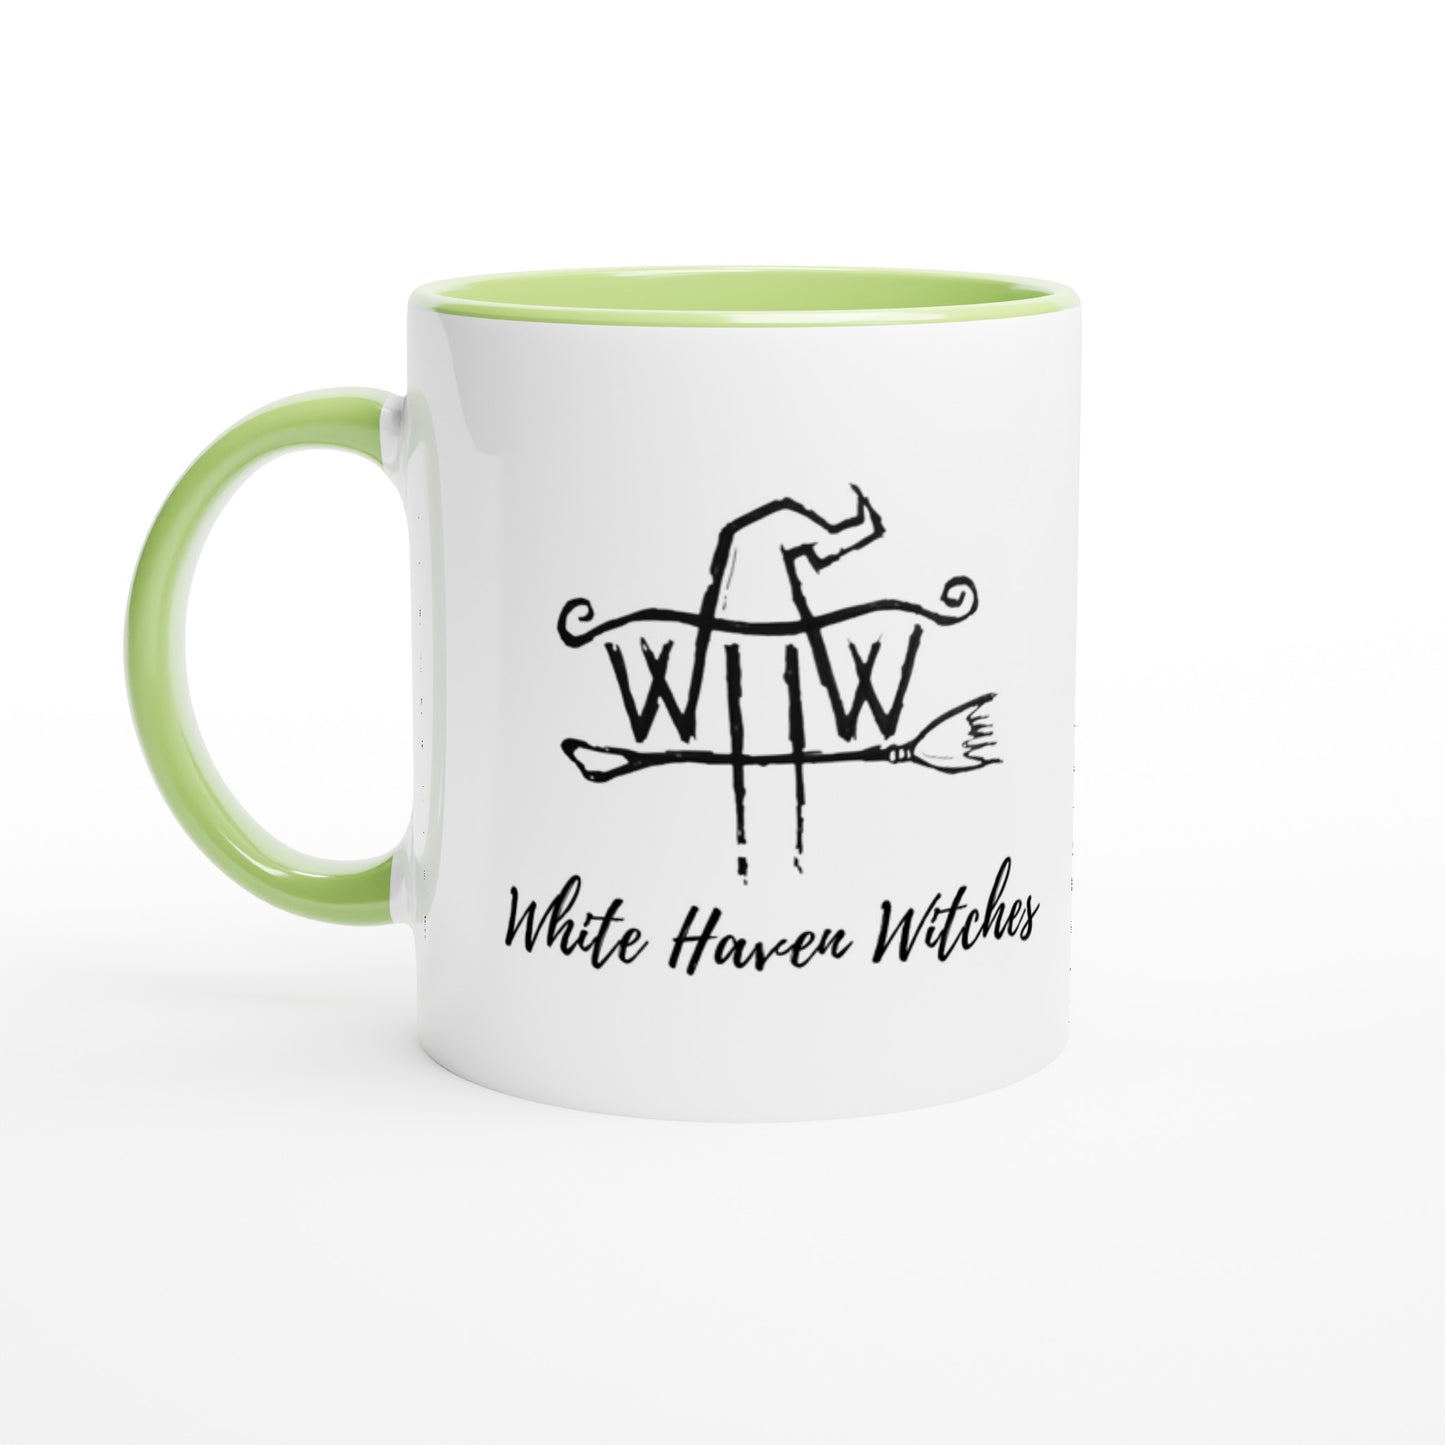 White Haven Witches White 11oz Ceramic Mug with Colour Inside